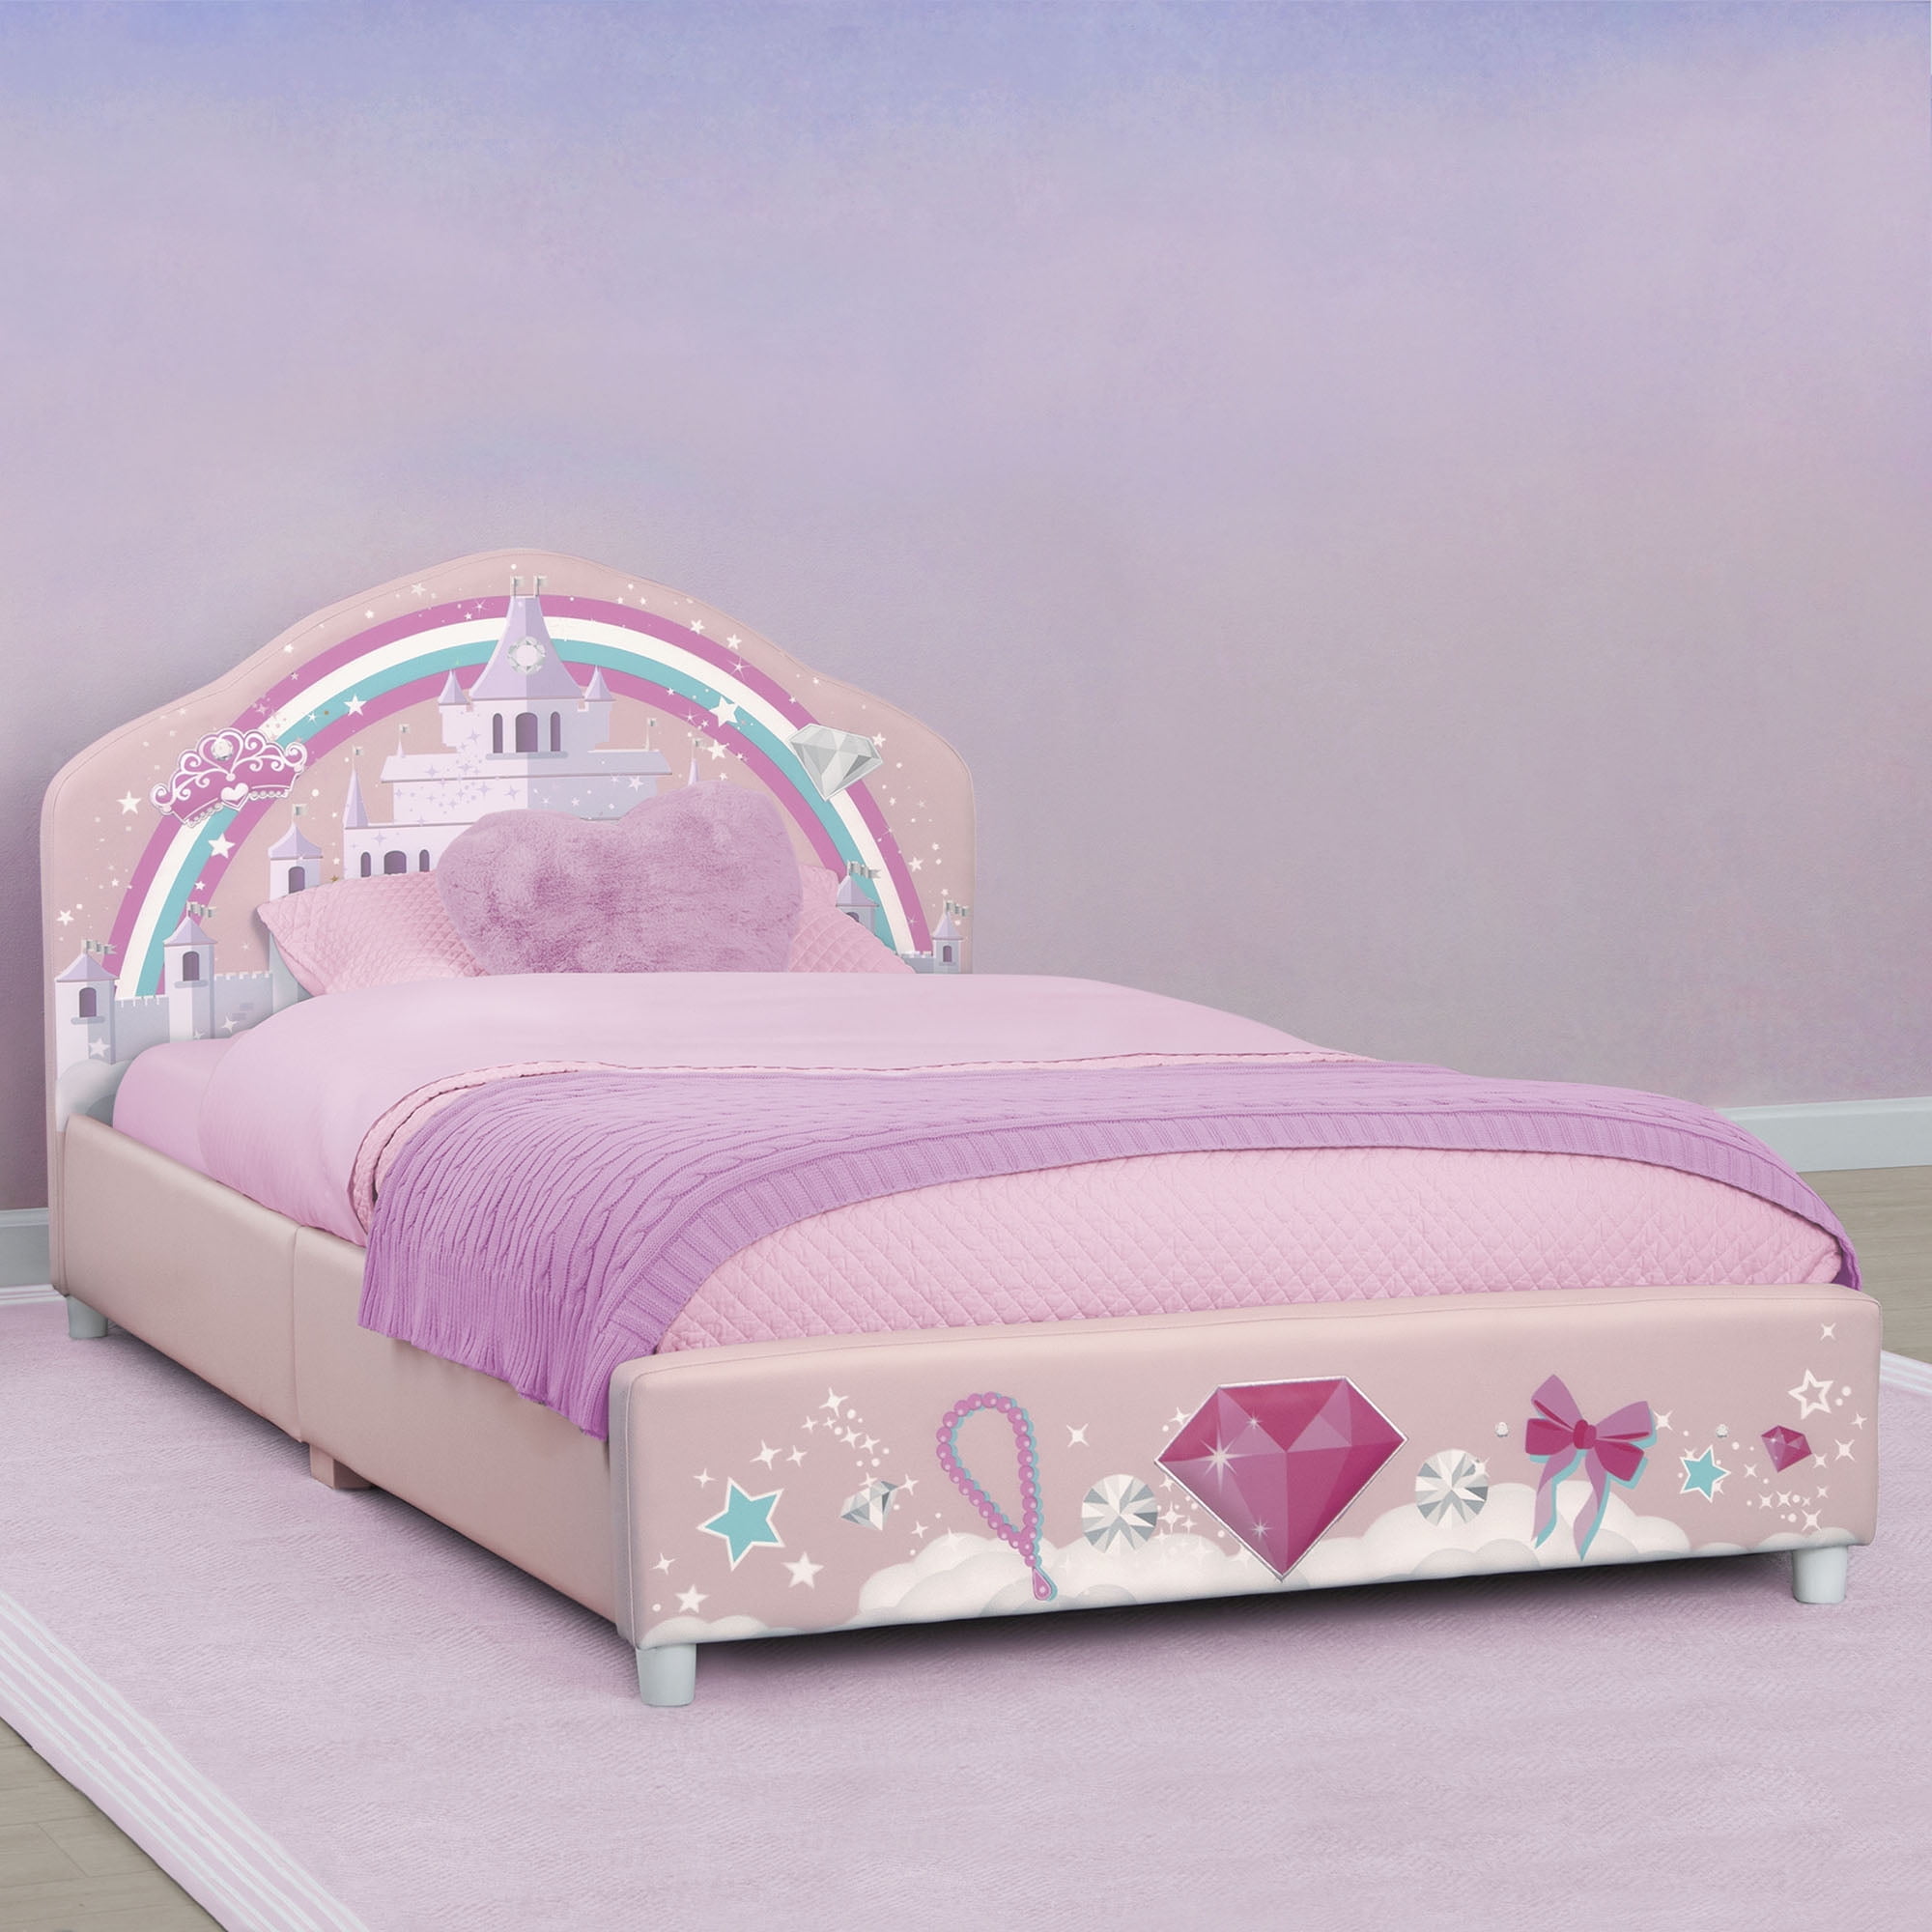 Delta Children Princess Upholstered, Kids Twin Bed Girls